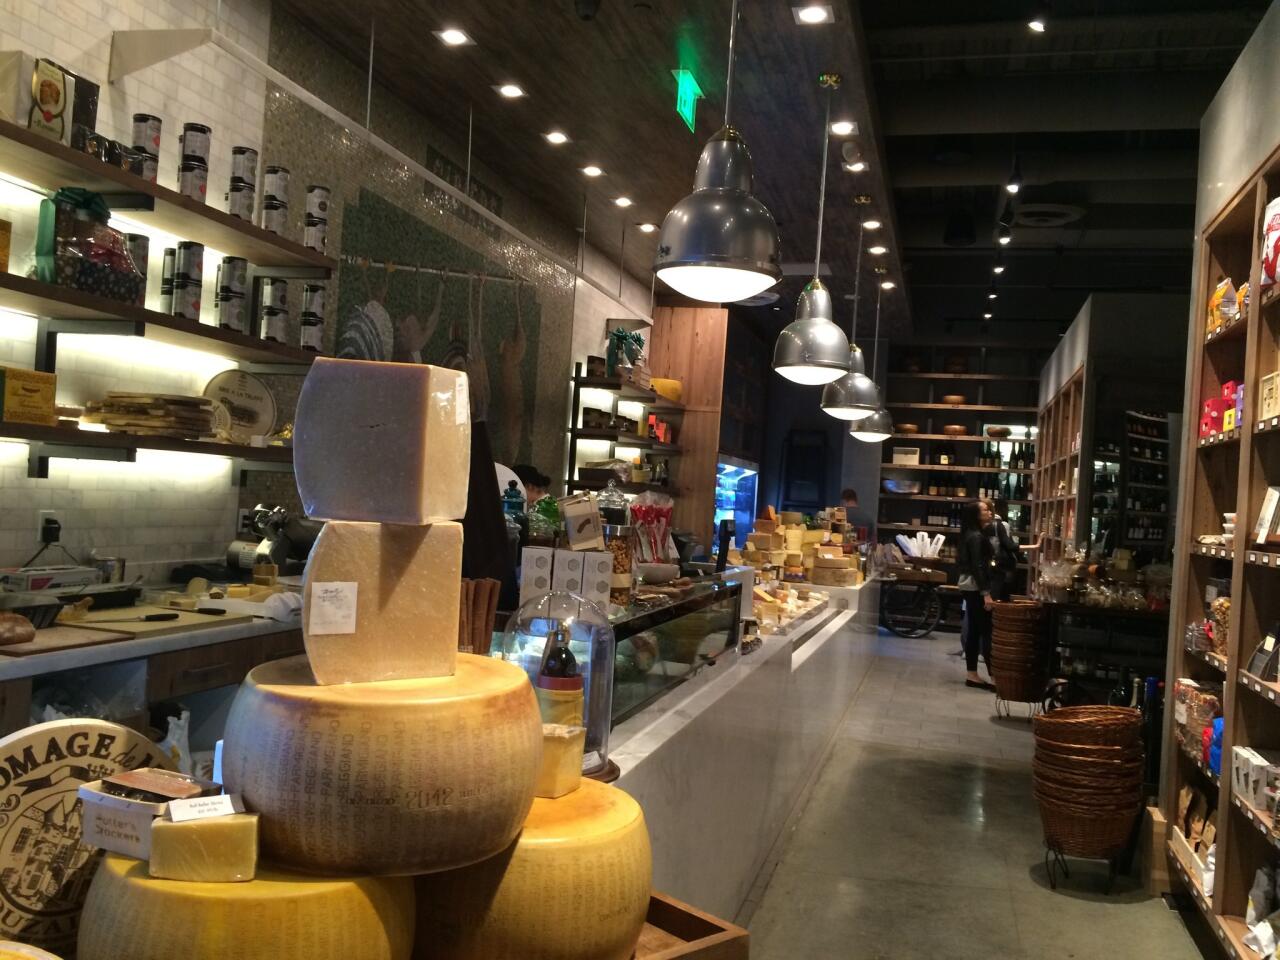 The cheese and gourmet shop at Wally's Vinoteca